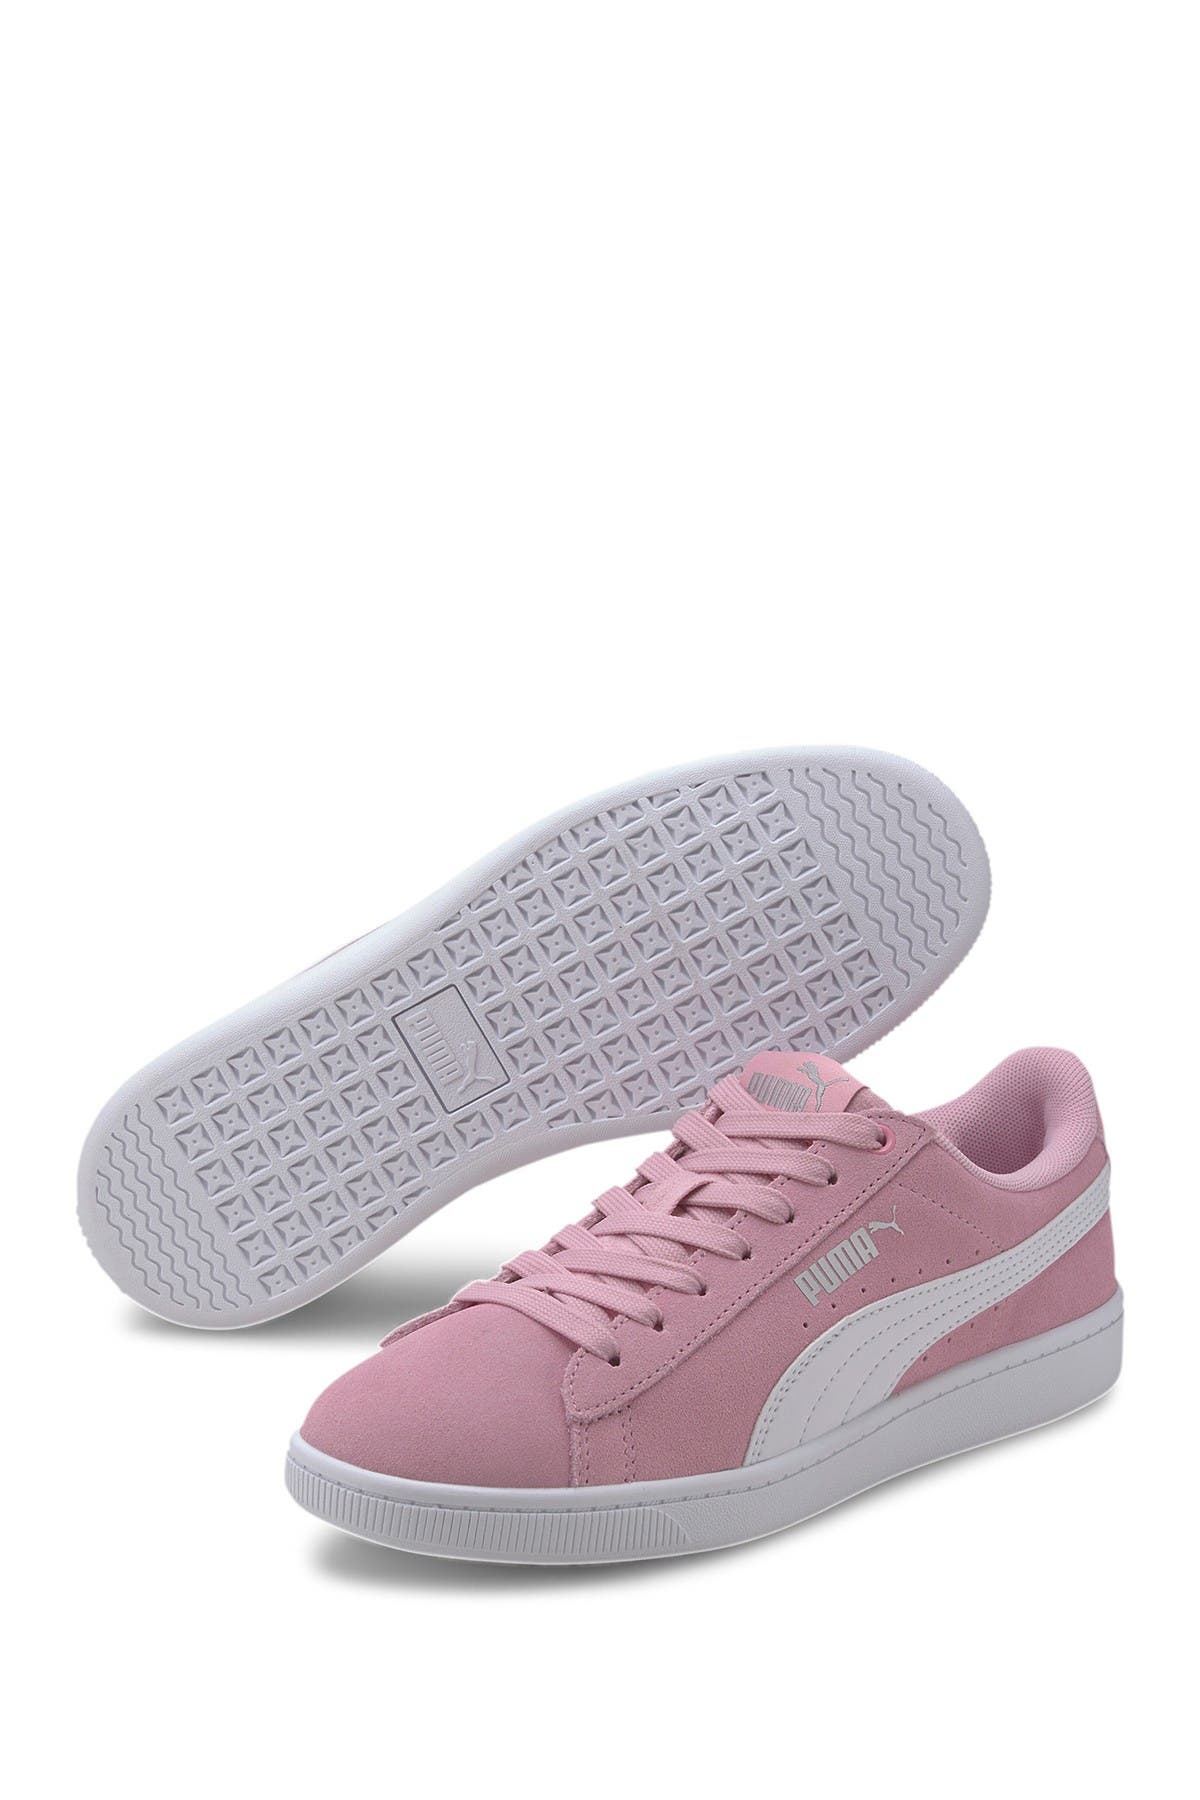 pink puma girl shoes